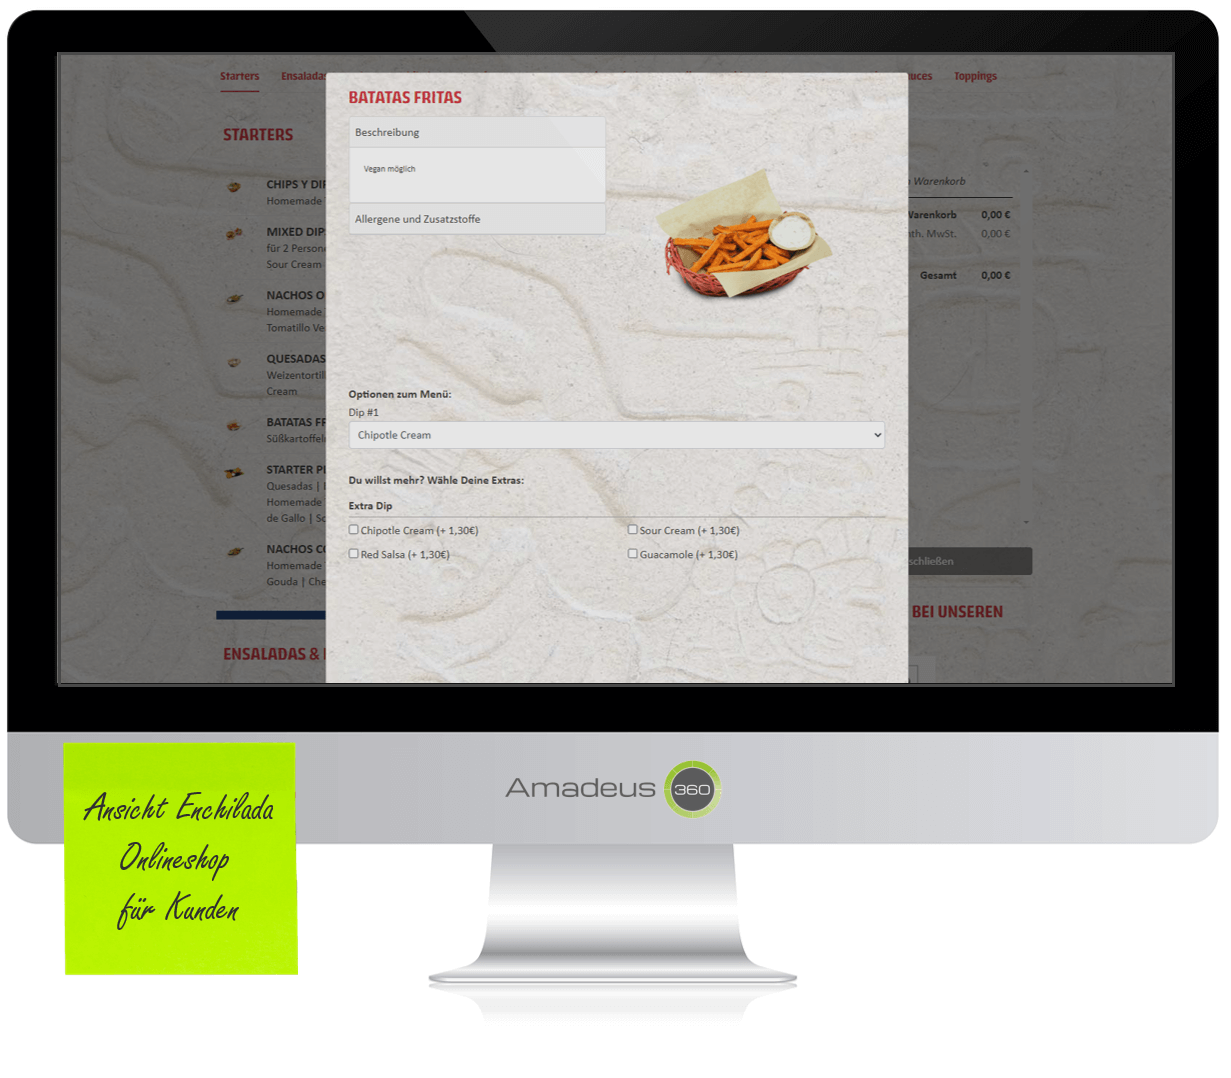 Enchilada Onlineshop mit AmadeusGo am PC komprimiert